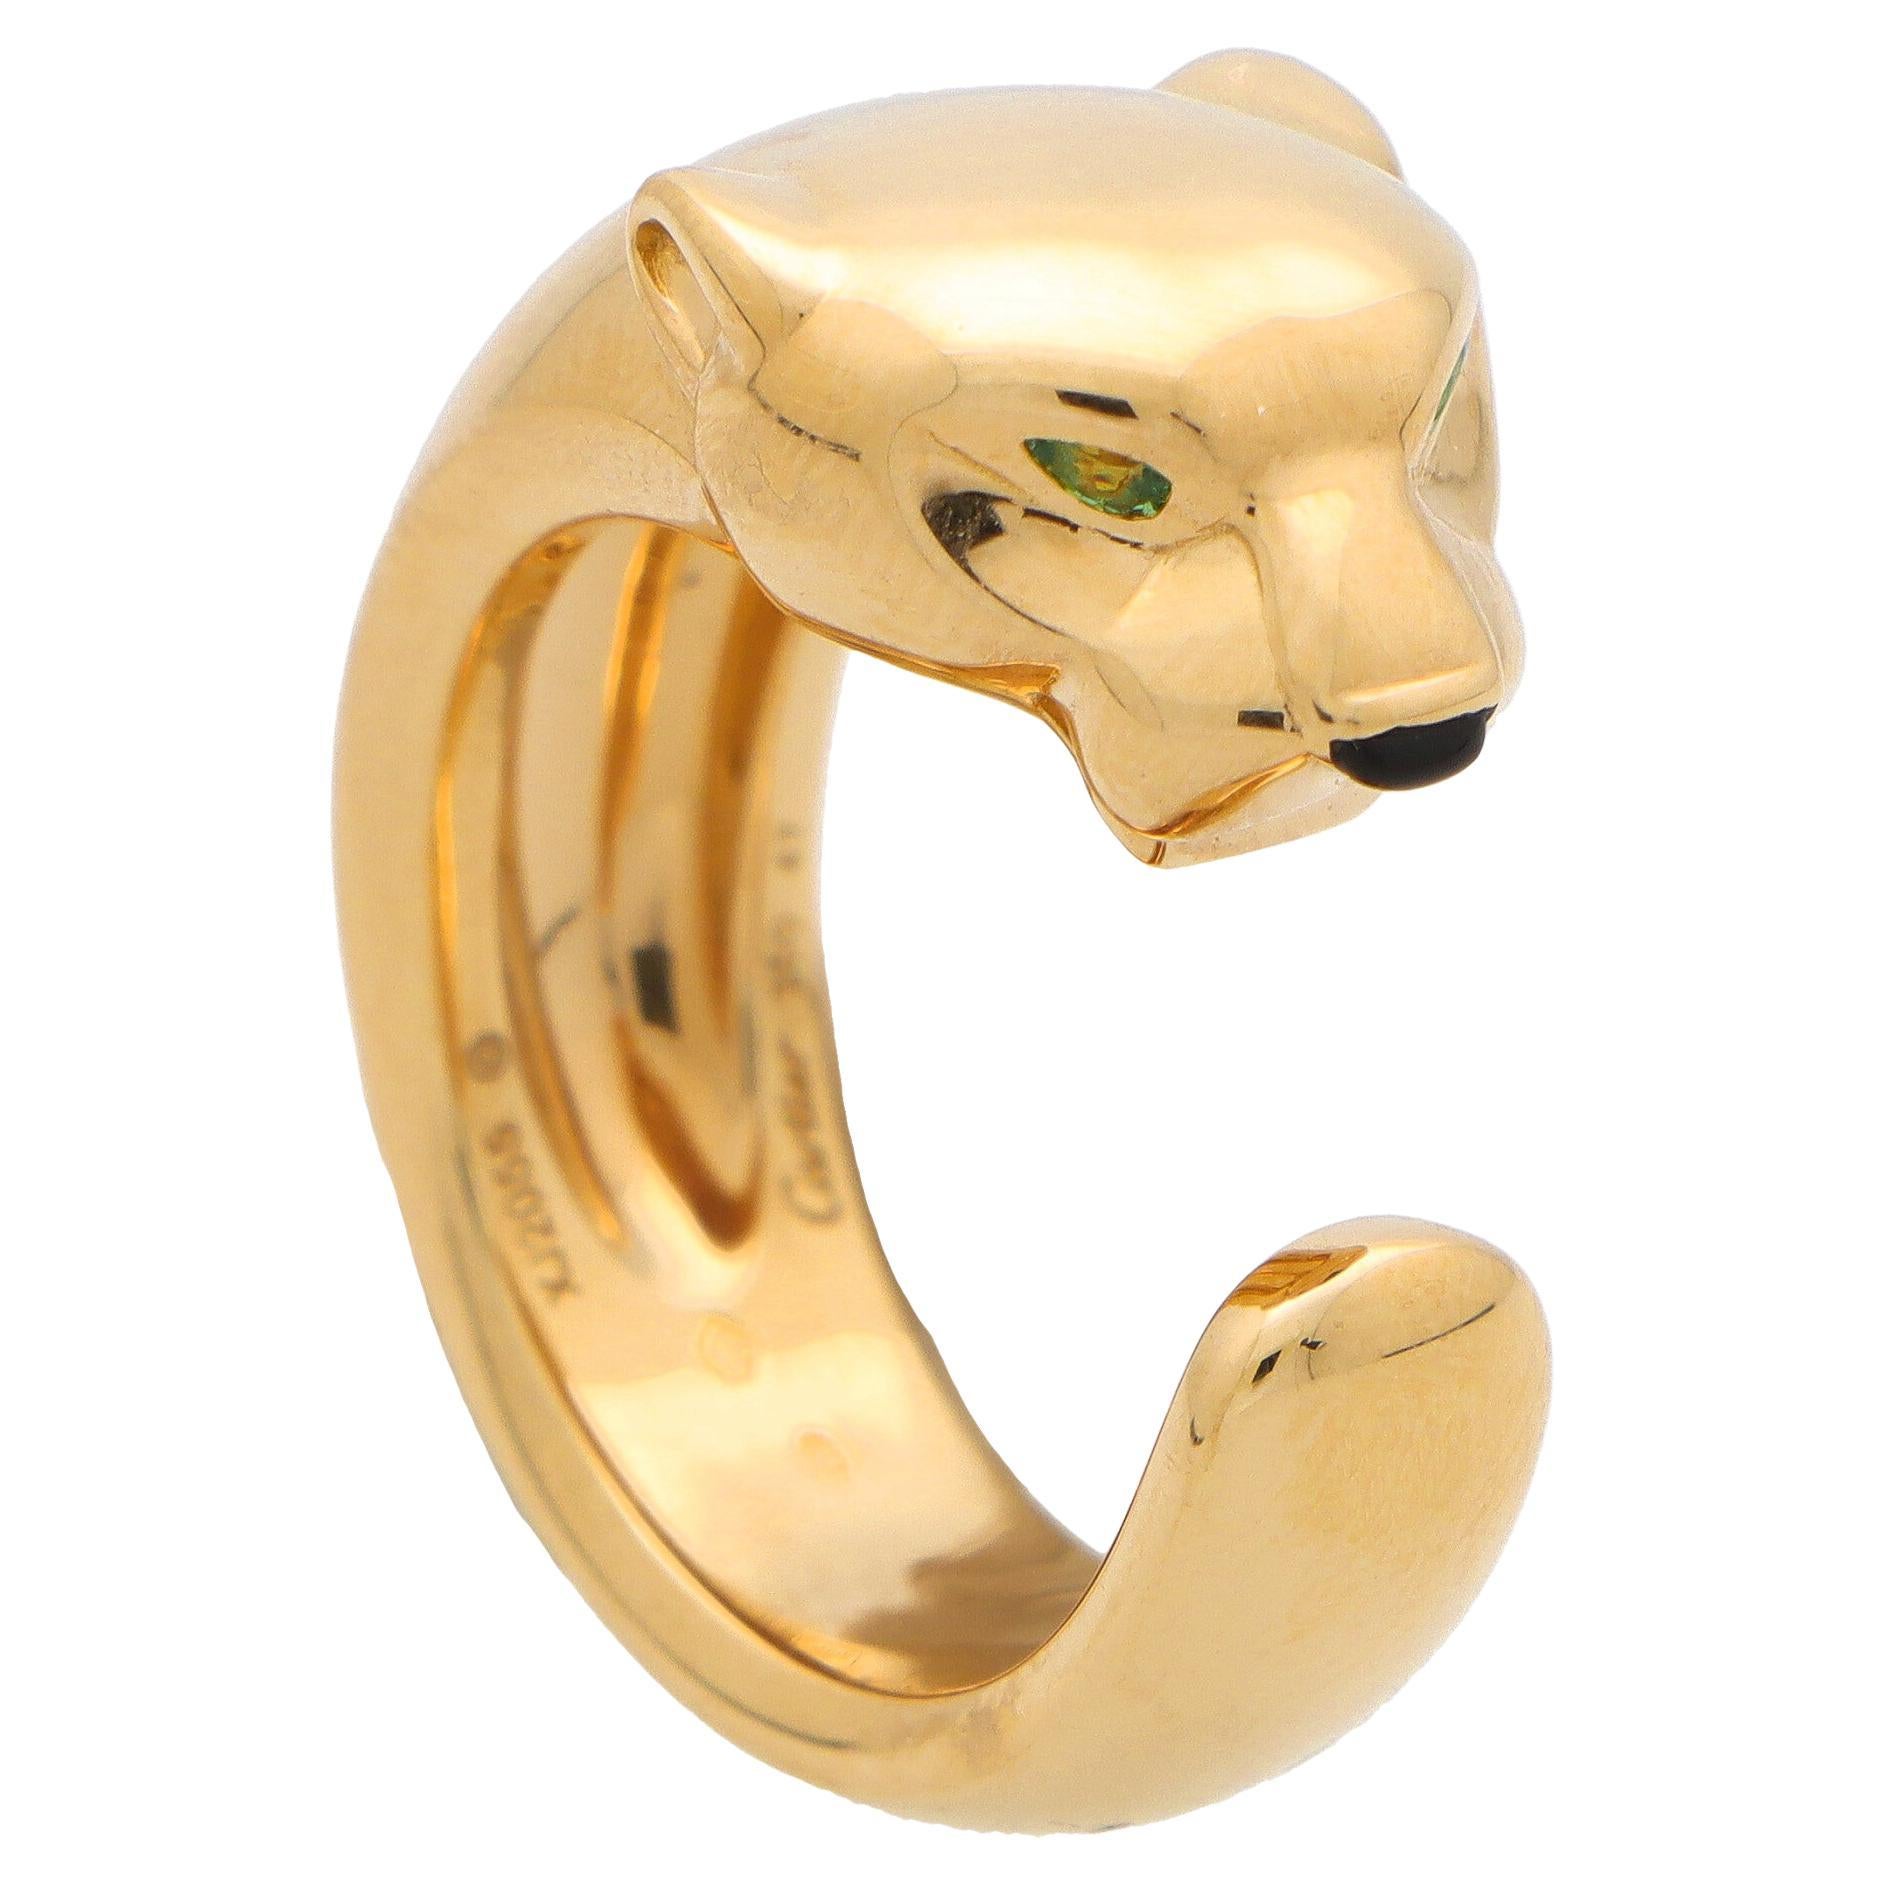 Vintage Panthère de Cartier Ring with Tsavoirte Garnets Set in 18k Yellow Gold